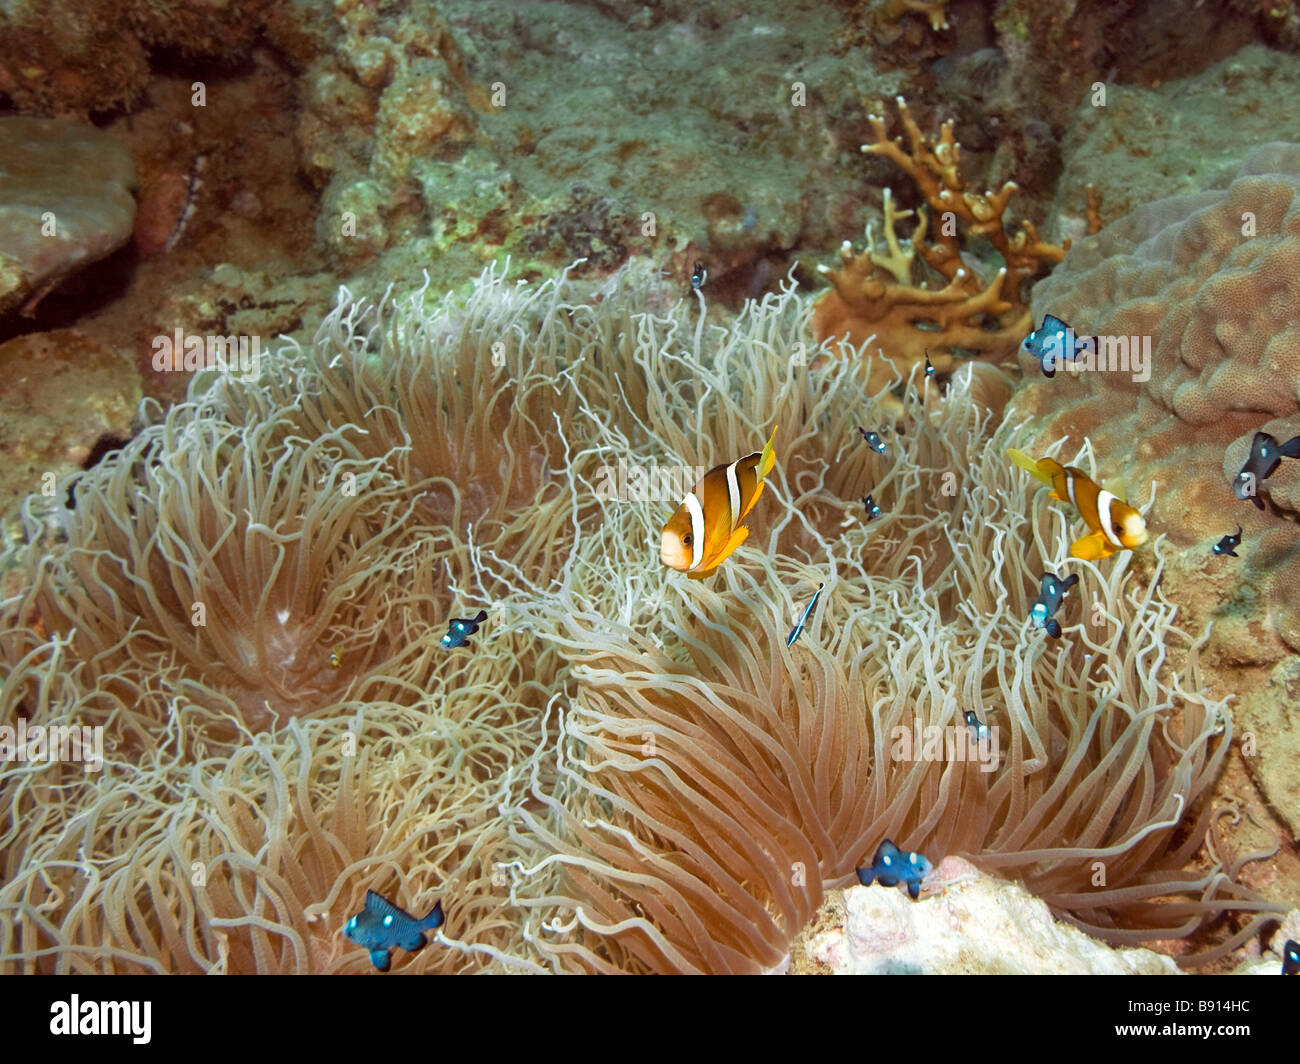 Orange finned clownfish and Anemone Indo pasific ocean Stock Photo